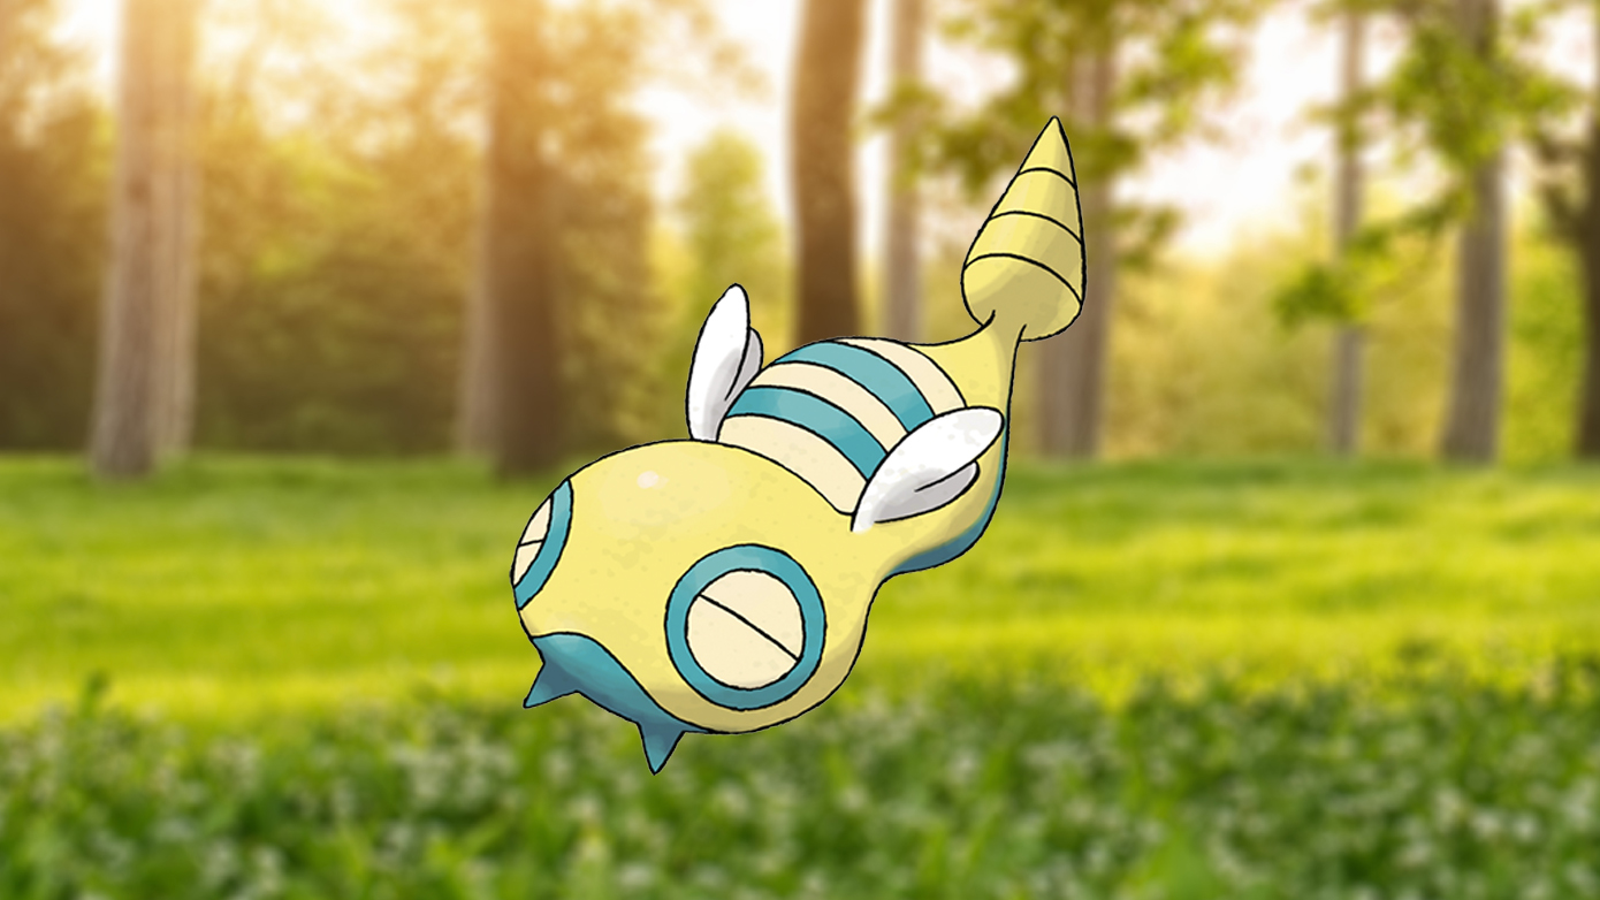 Can Dunsparce be shiny in Pokémon Go? - Polygon